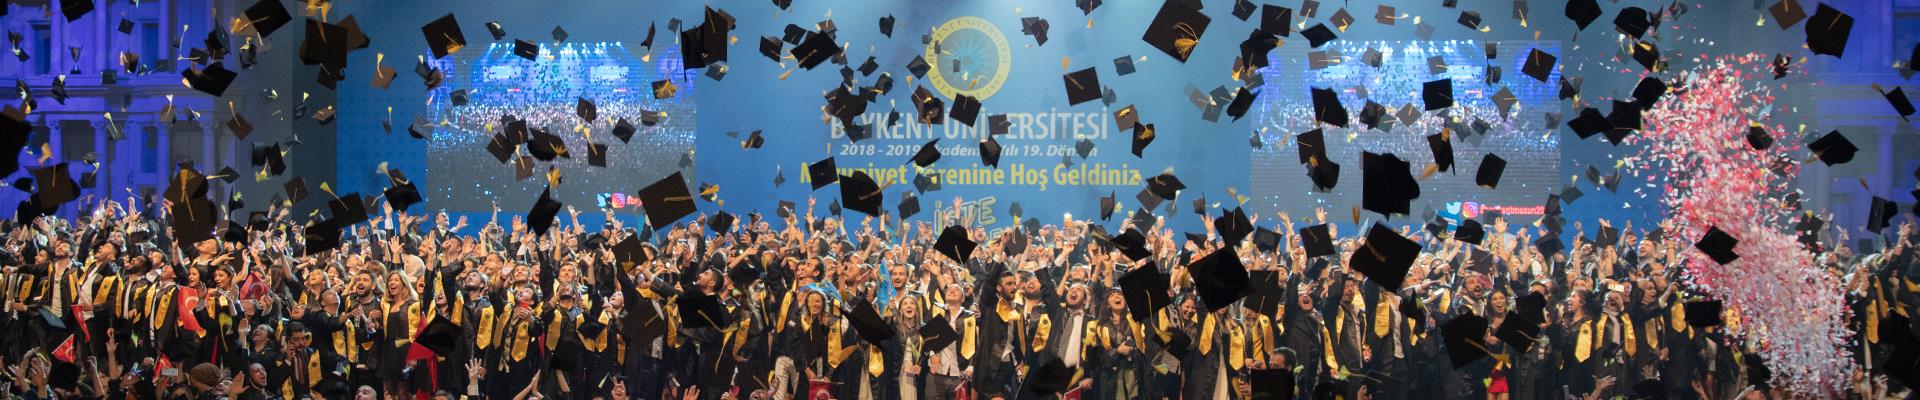 mezuniyet-2018-2019